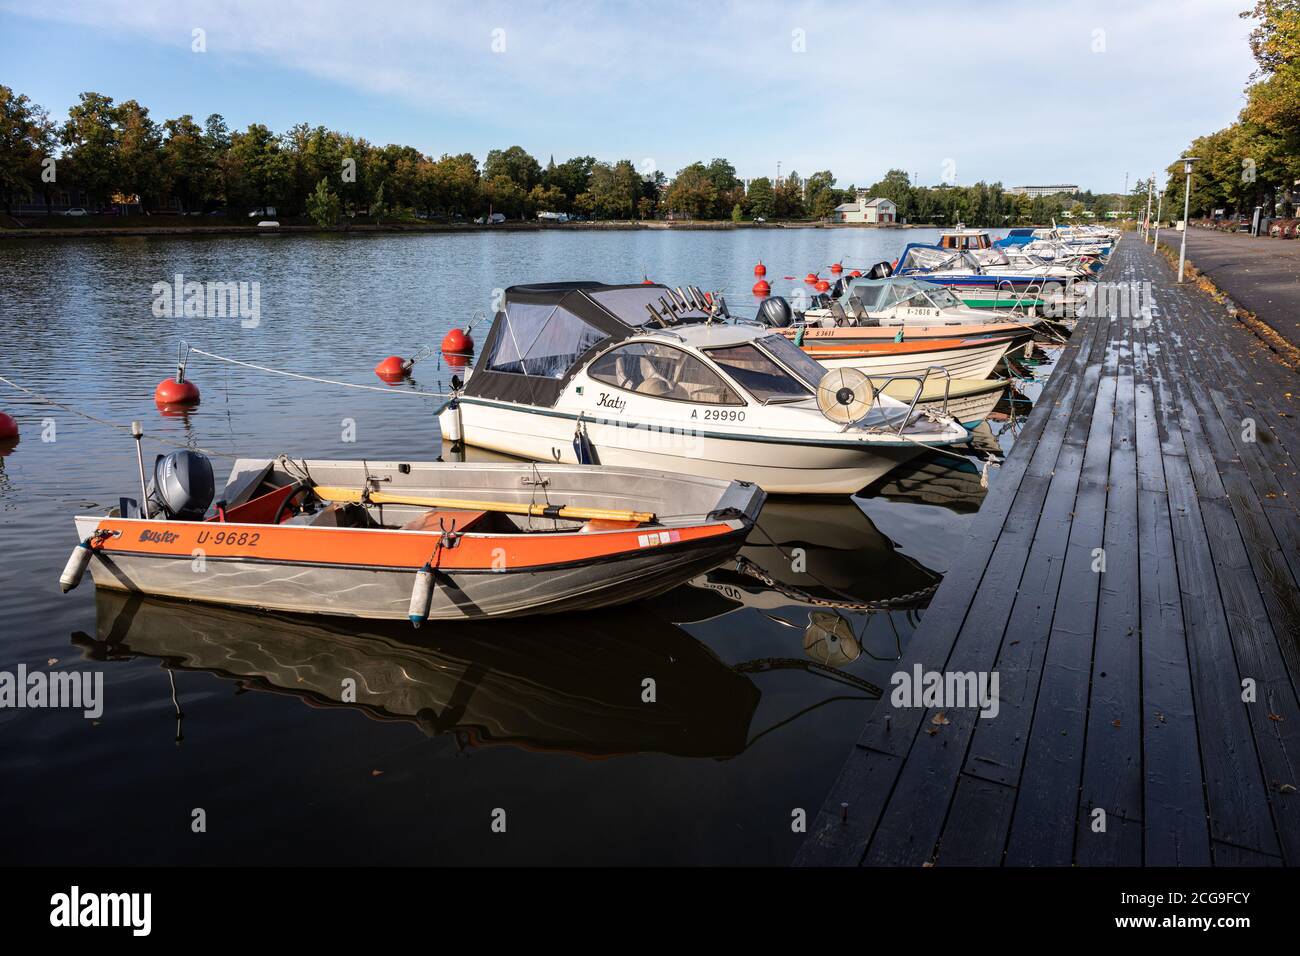 Pitkäsillanranta boardwalk and motorboats in Siltasaari district of Helsinki, Finland Stock Photo